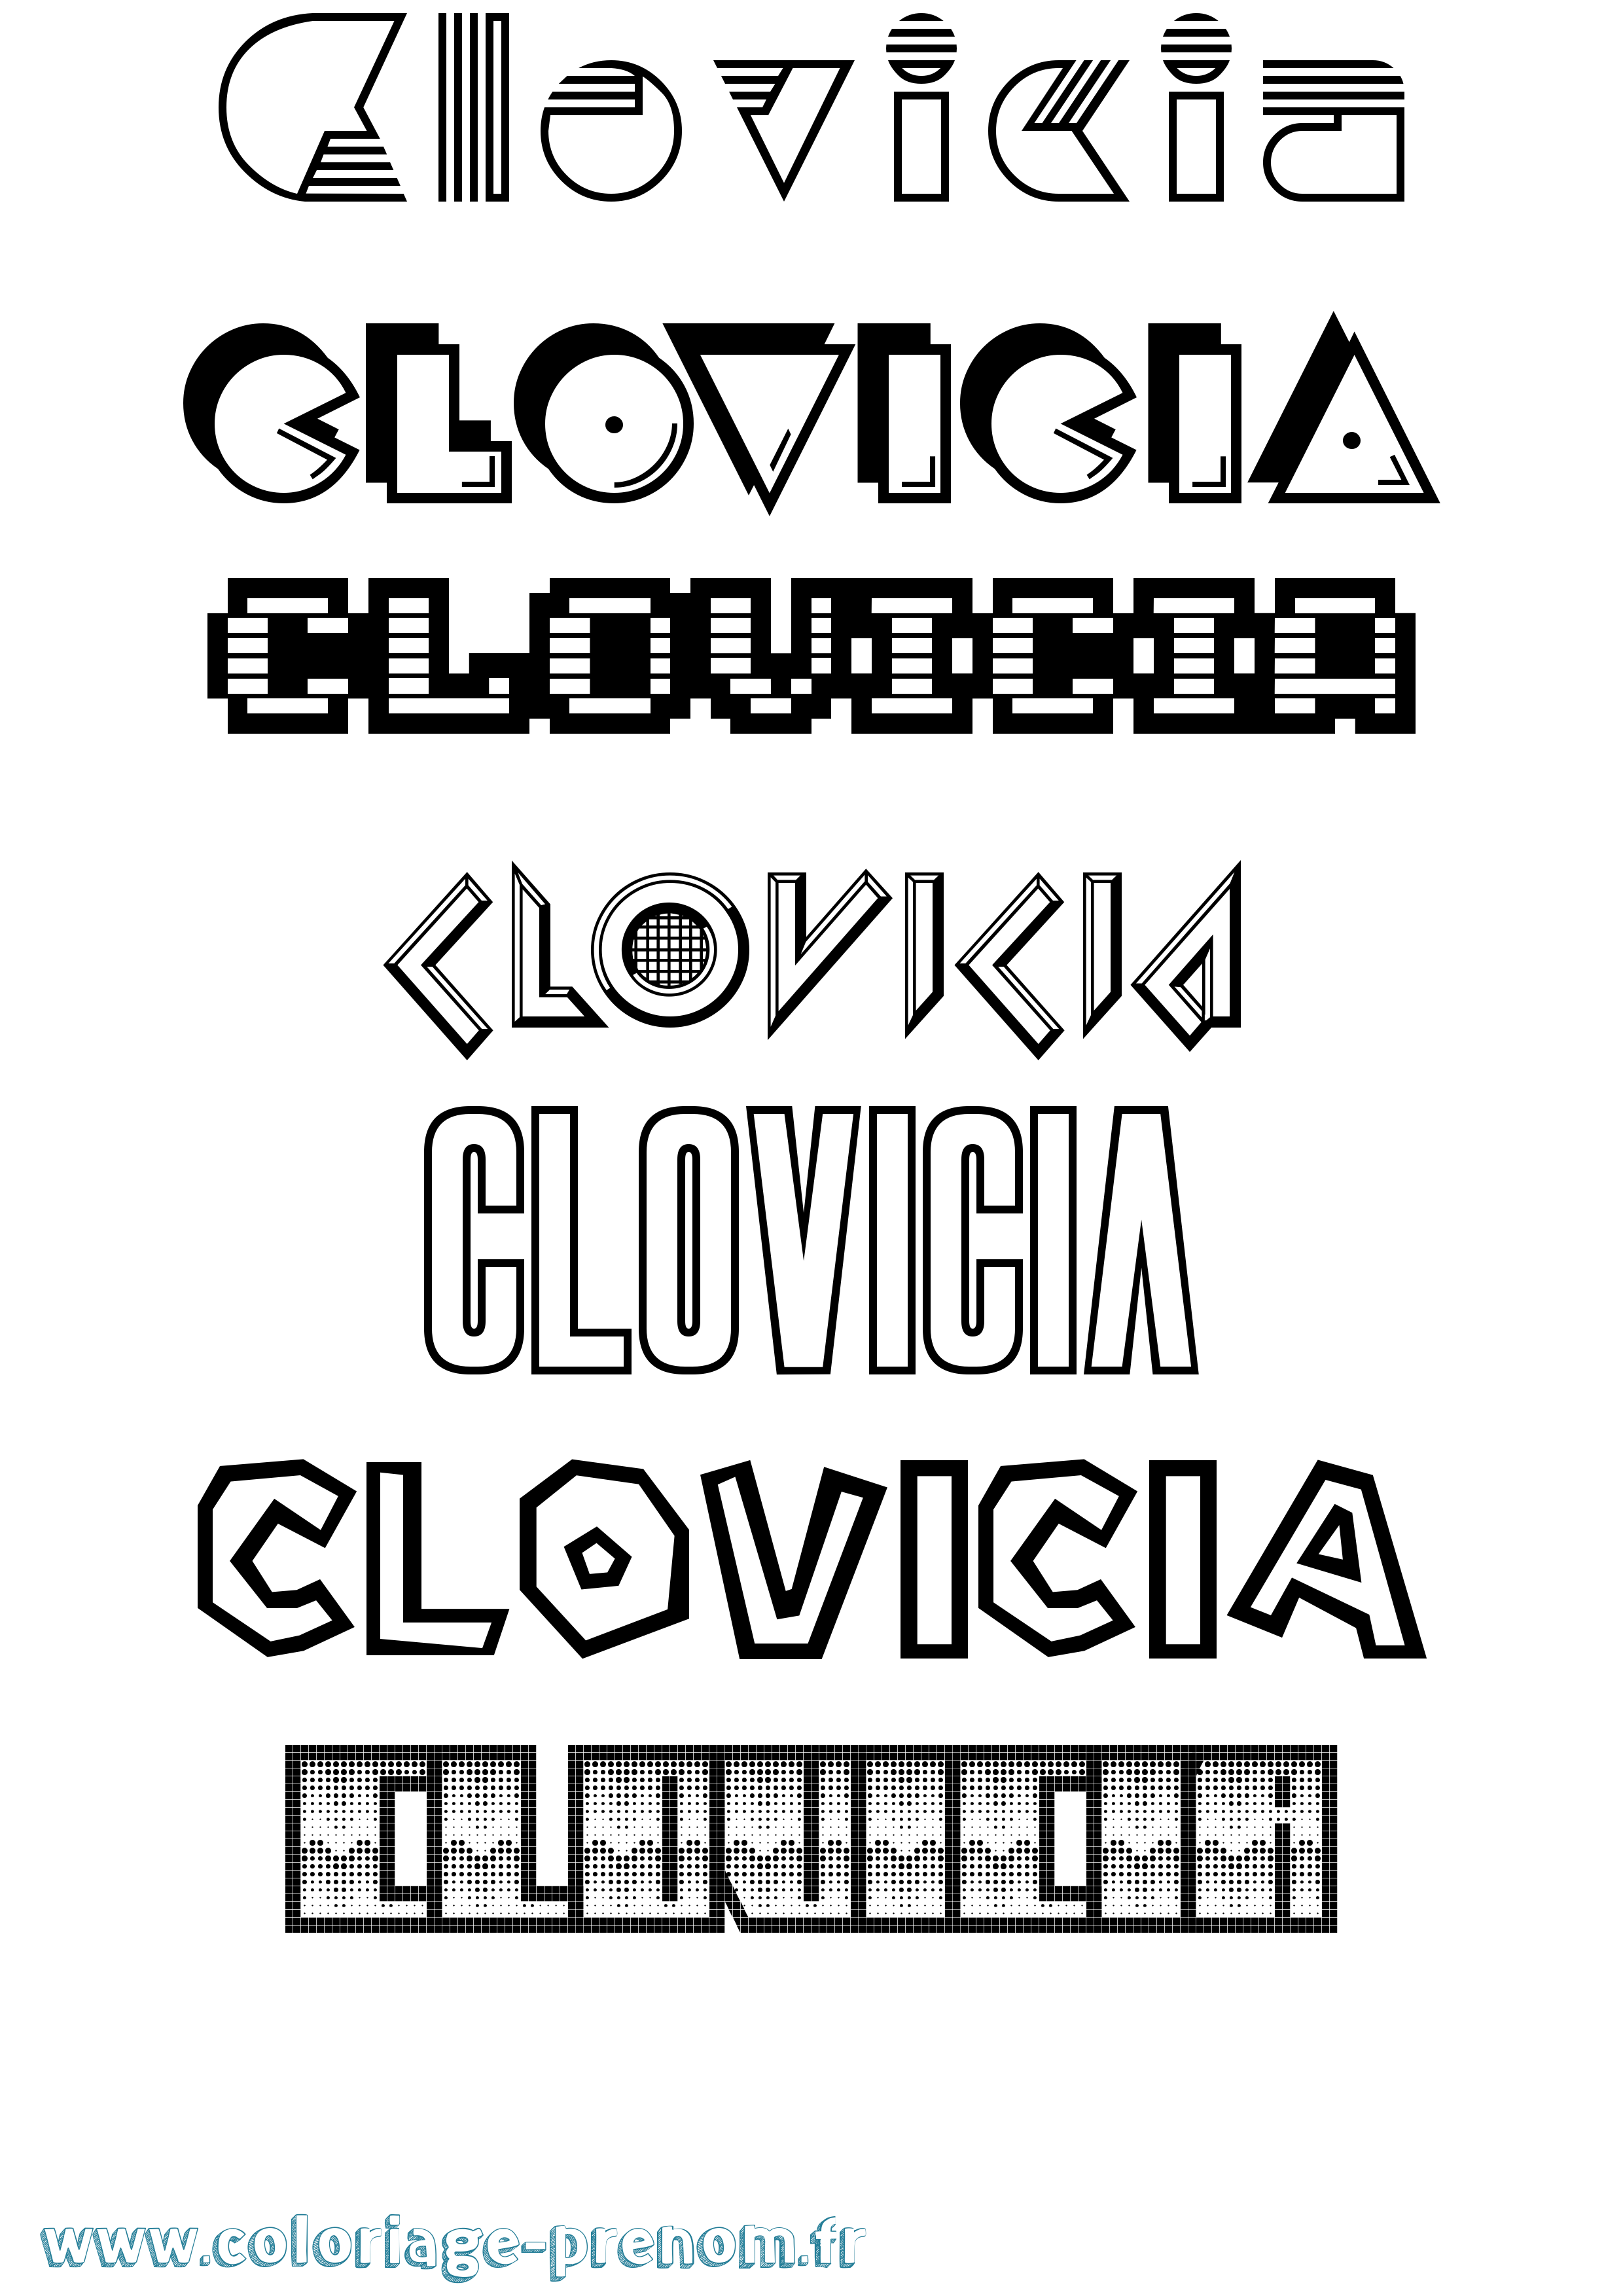 Coloriage prénom Clovicia Jeux Vidéos